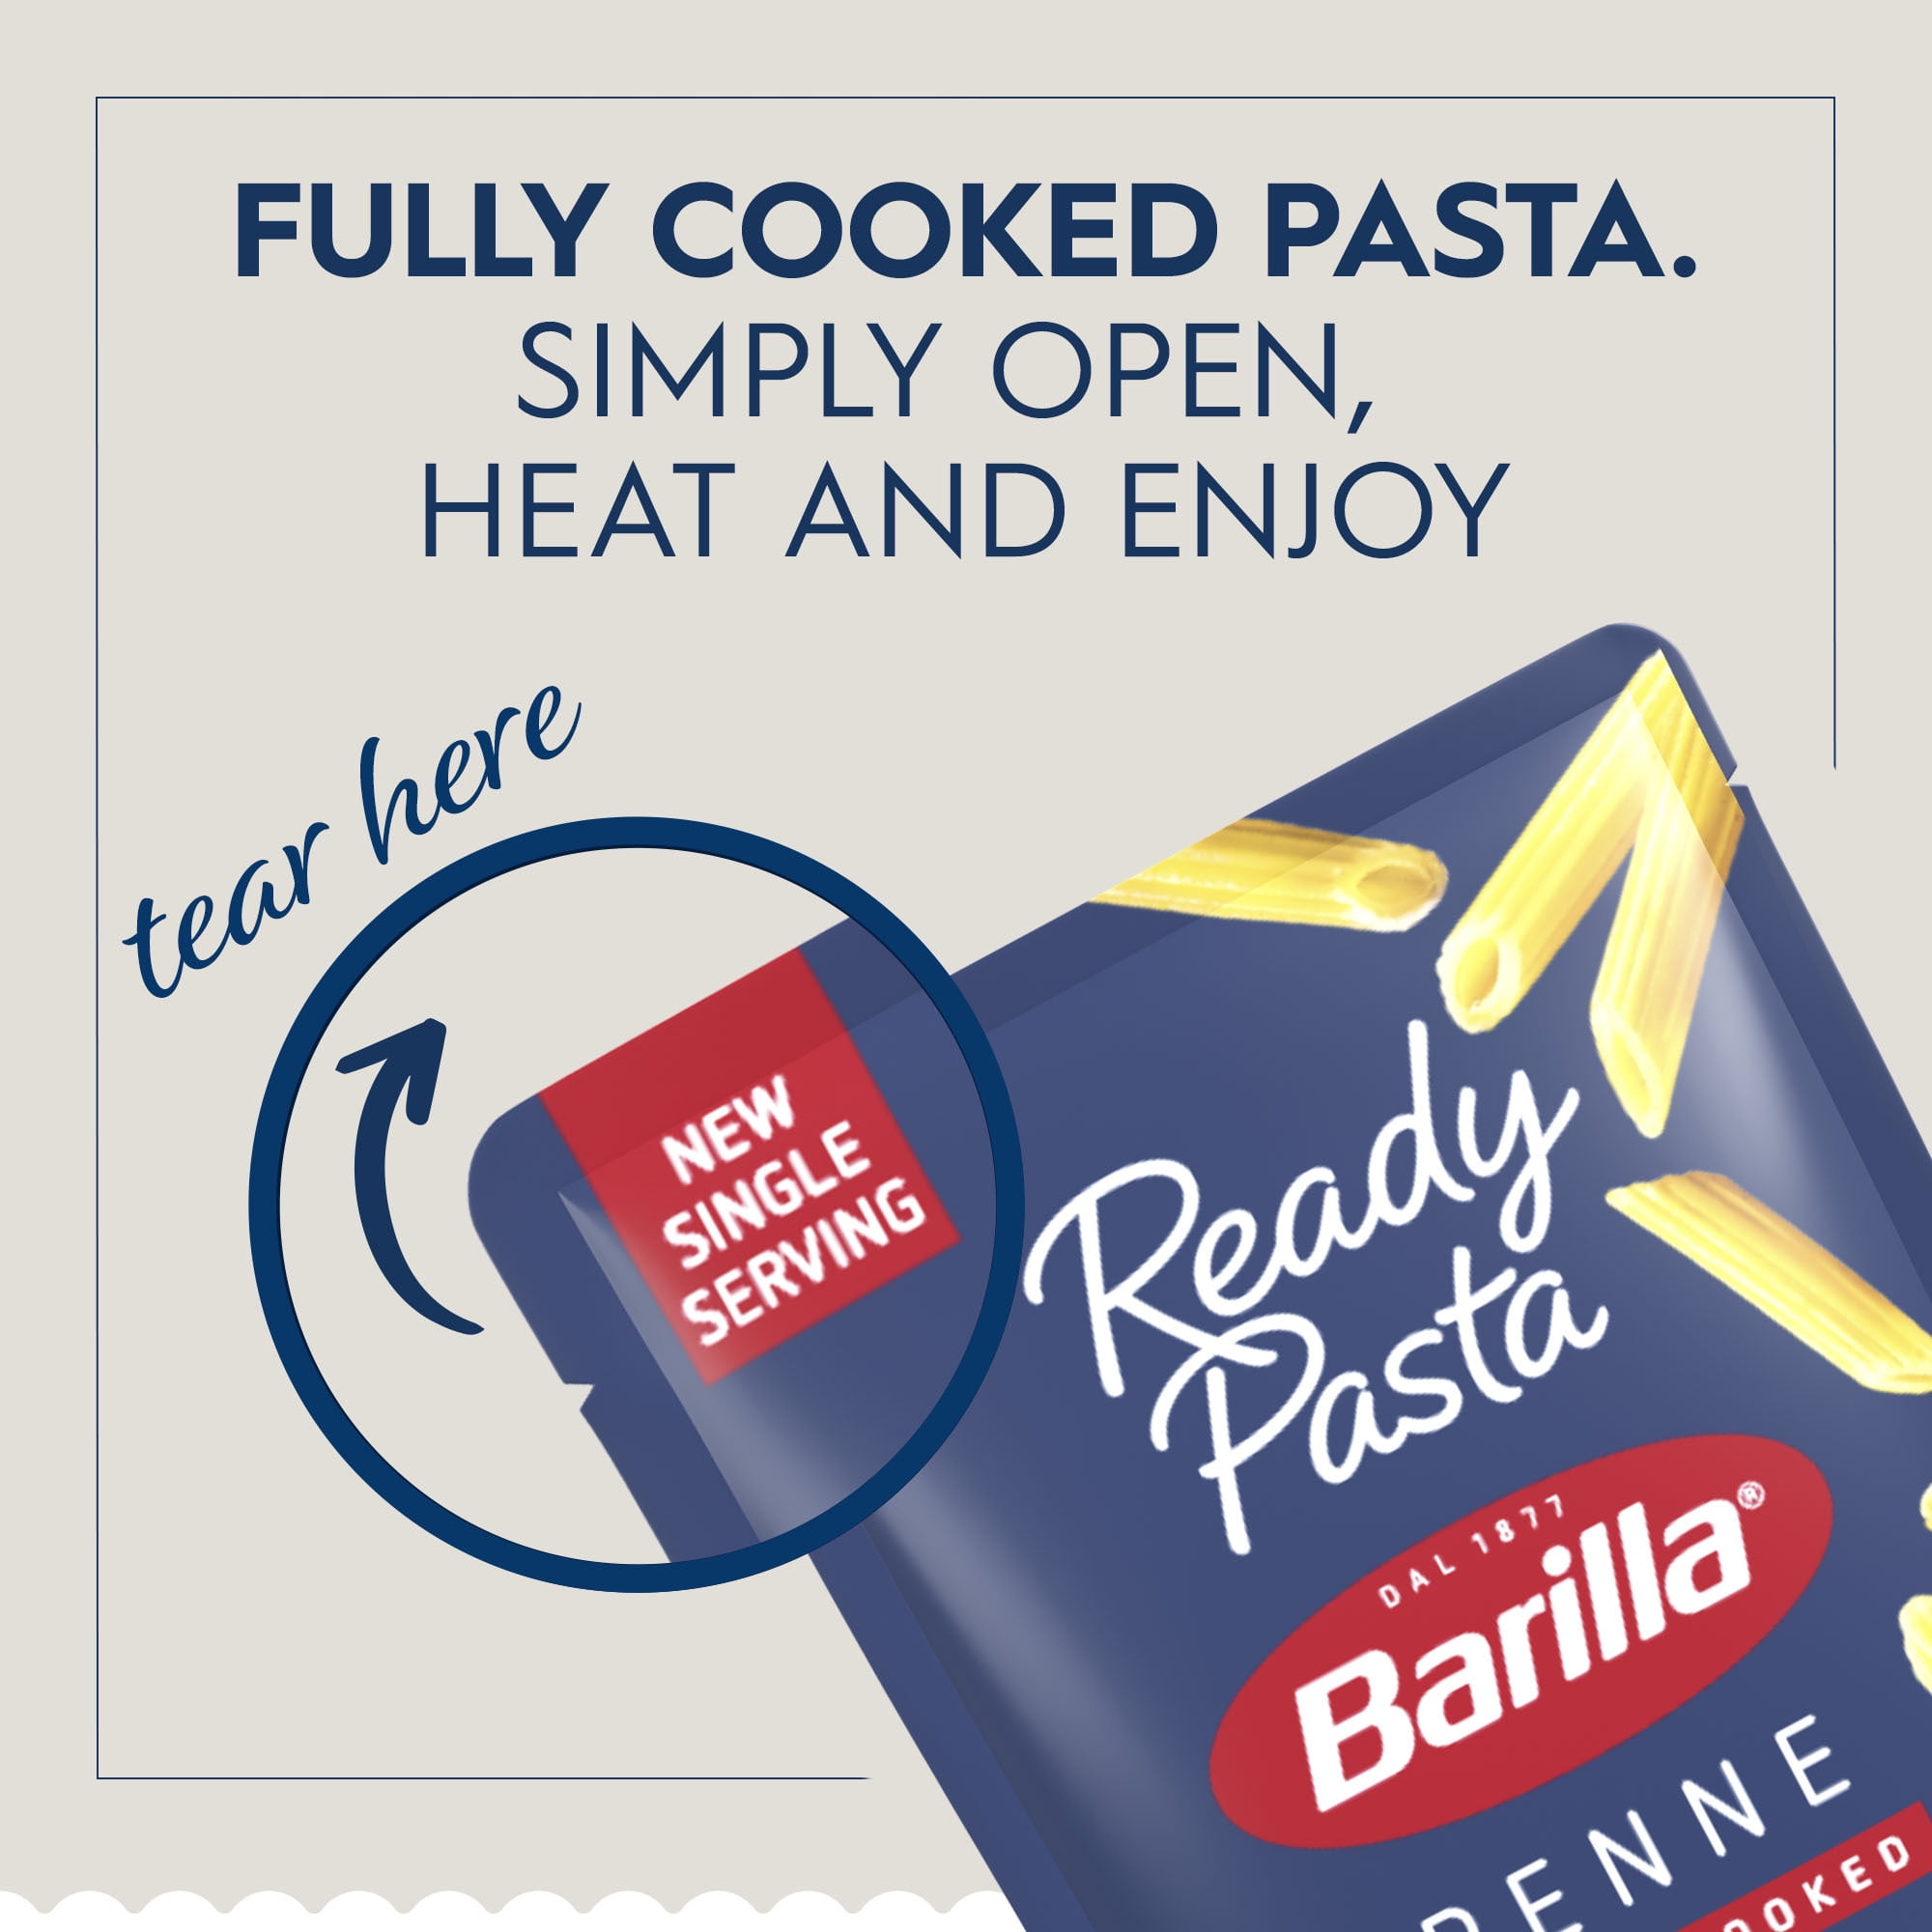 Barilla Ready Pasta - Barilla Ready Pasta, Ready Pasta - Ready Pasta, Penne  (8.5 oz), Shop